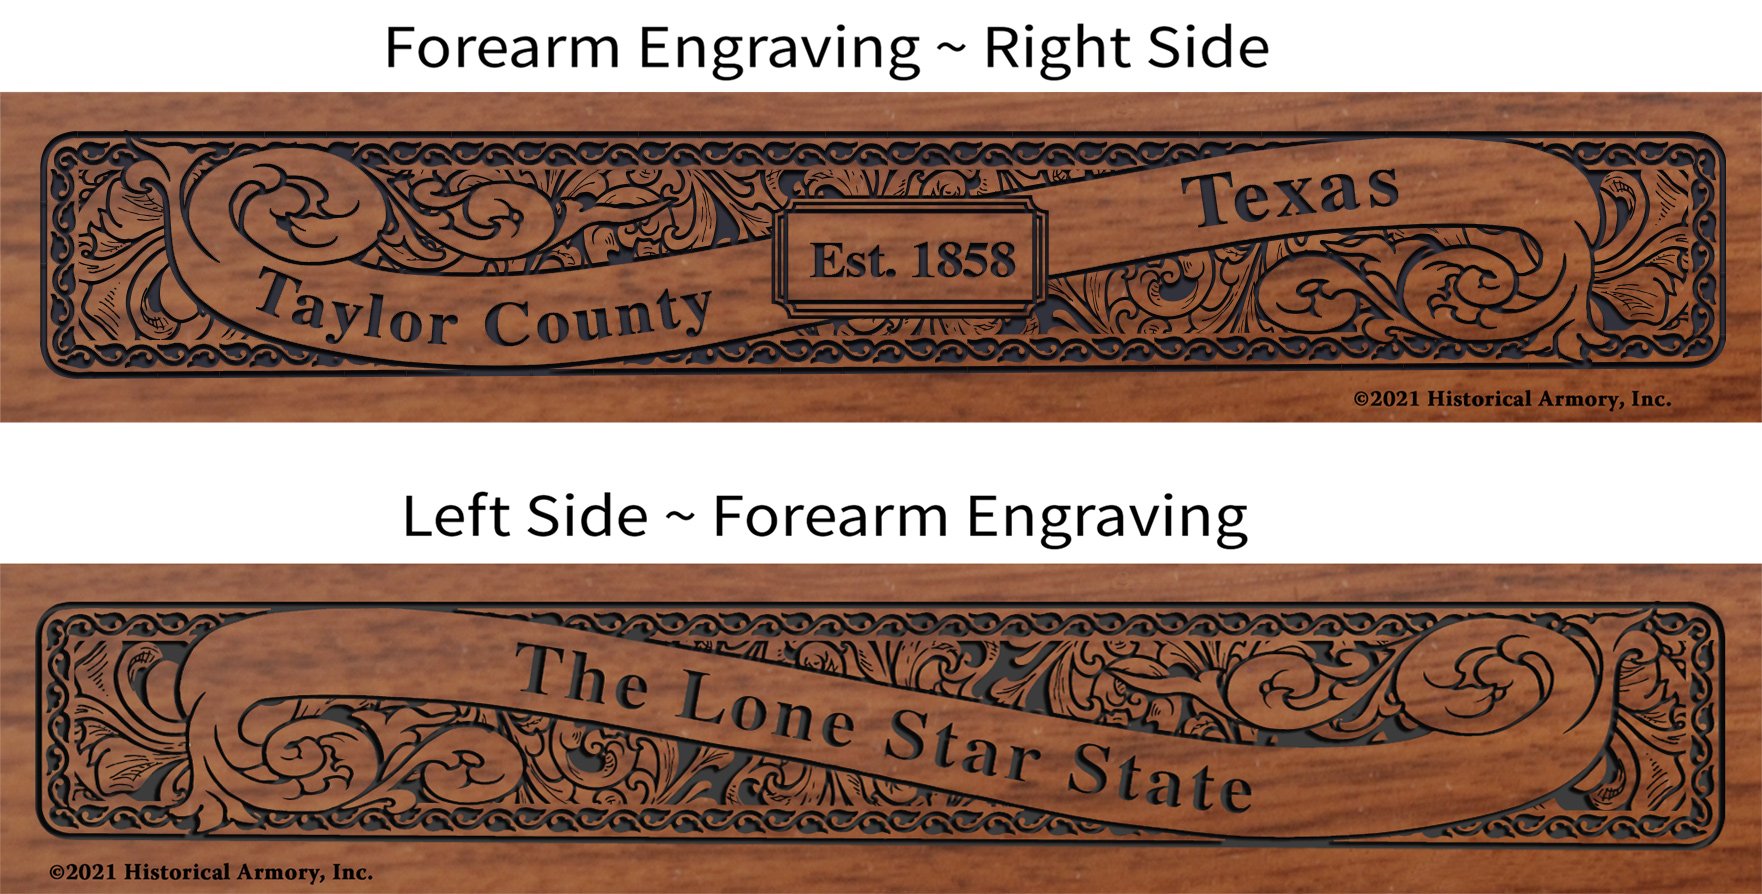 Taylor County Texas Establishment and Motto History Engraved Rifle Forearm